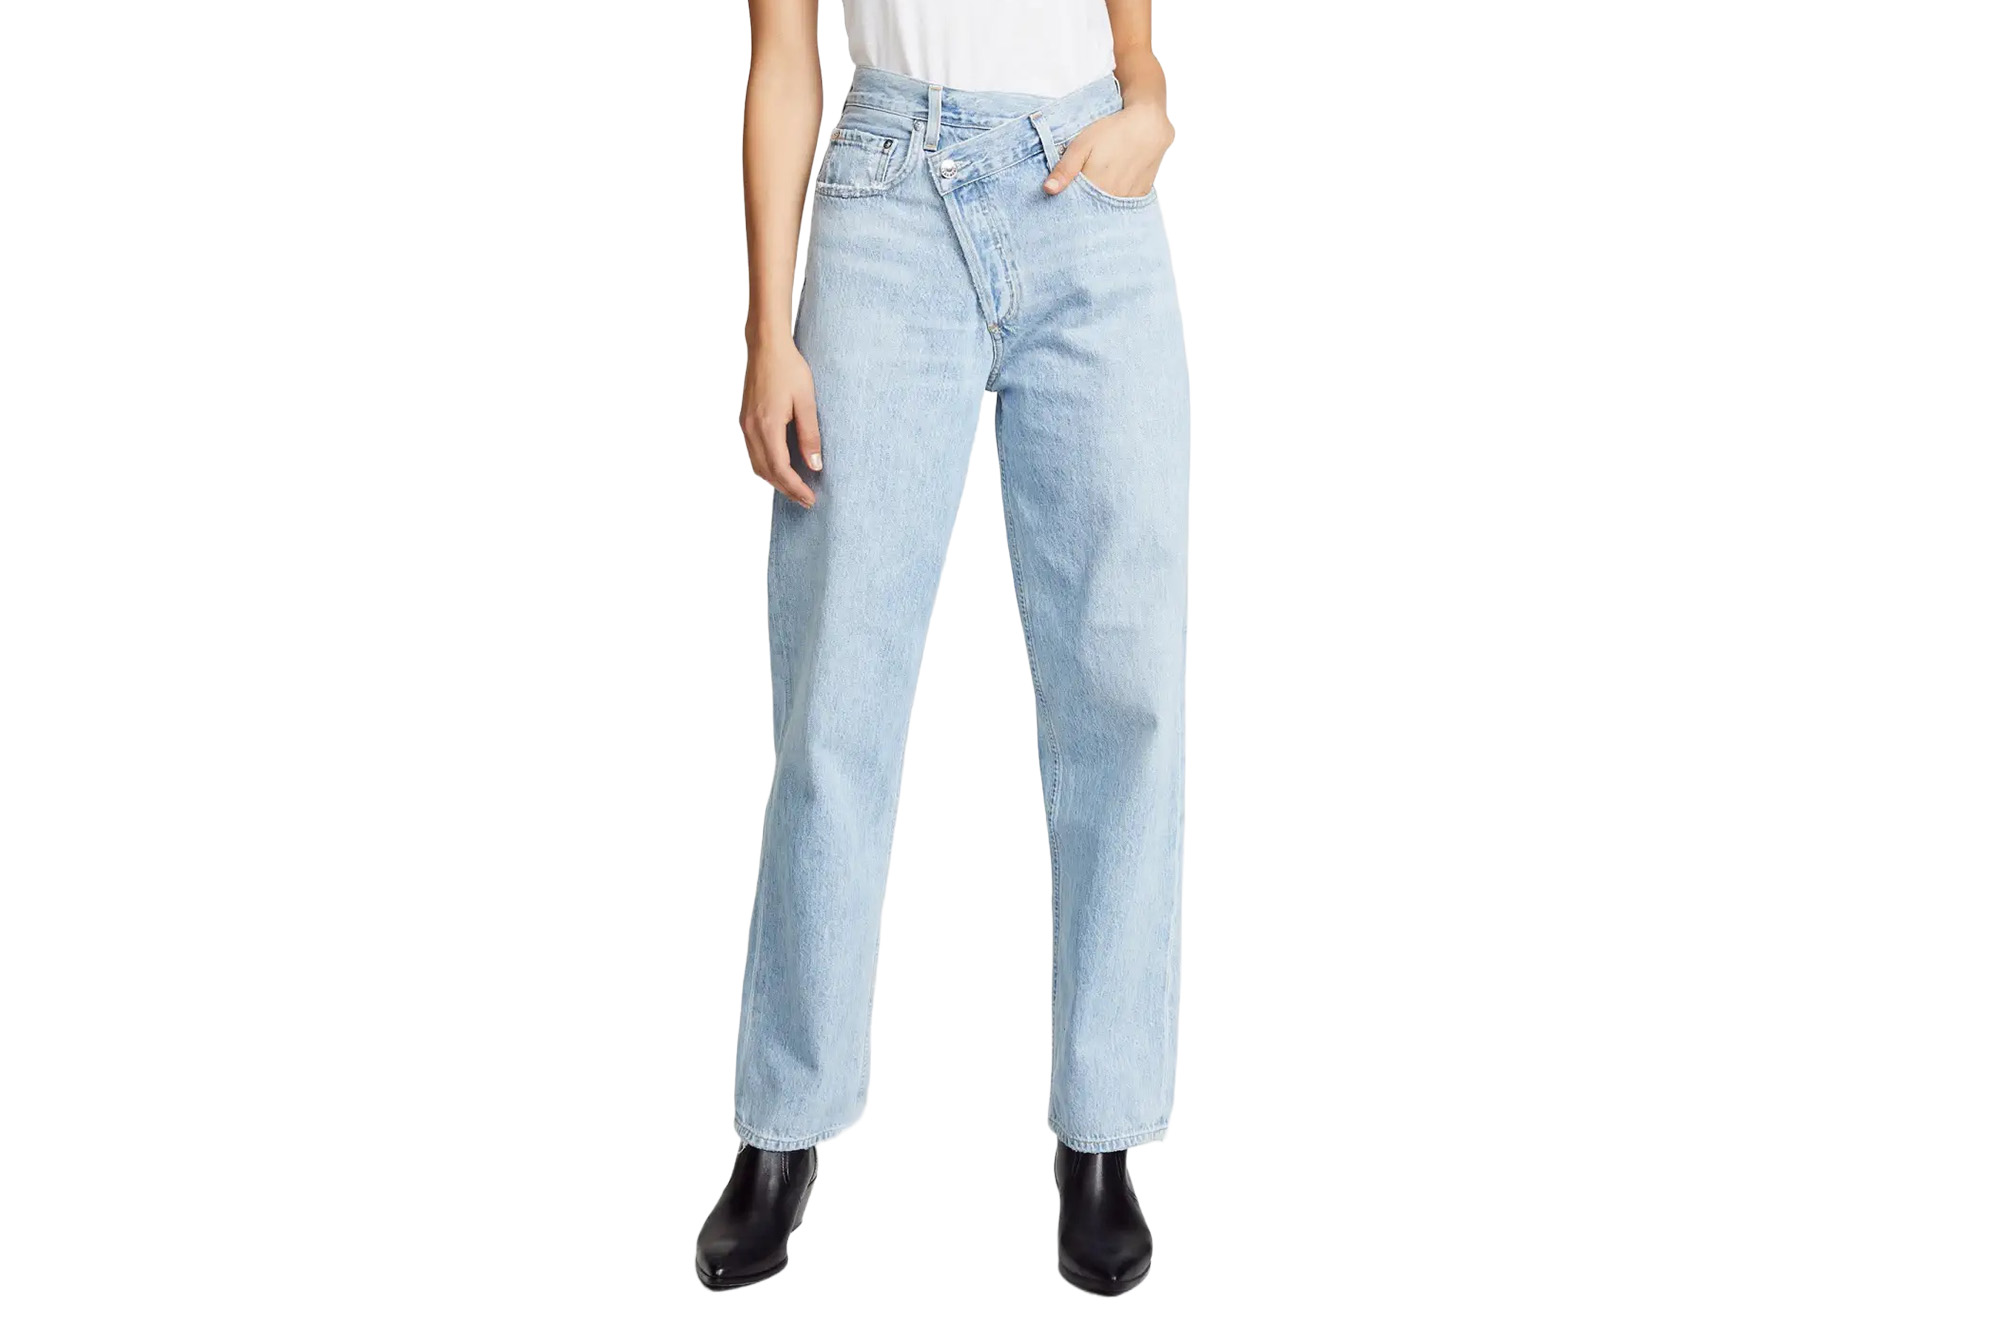 Agolde criss cross jeans on a model